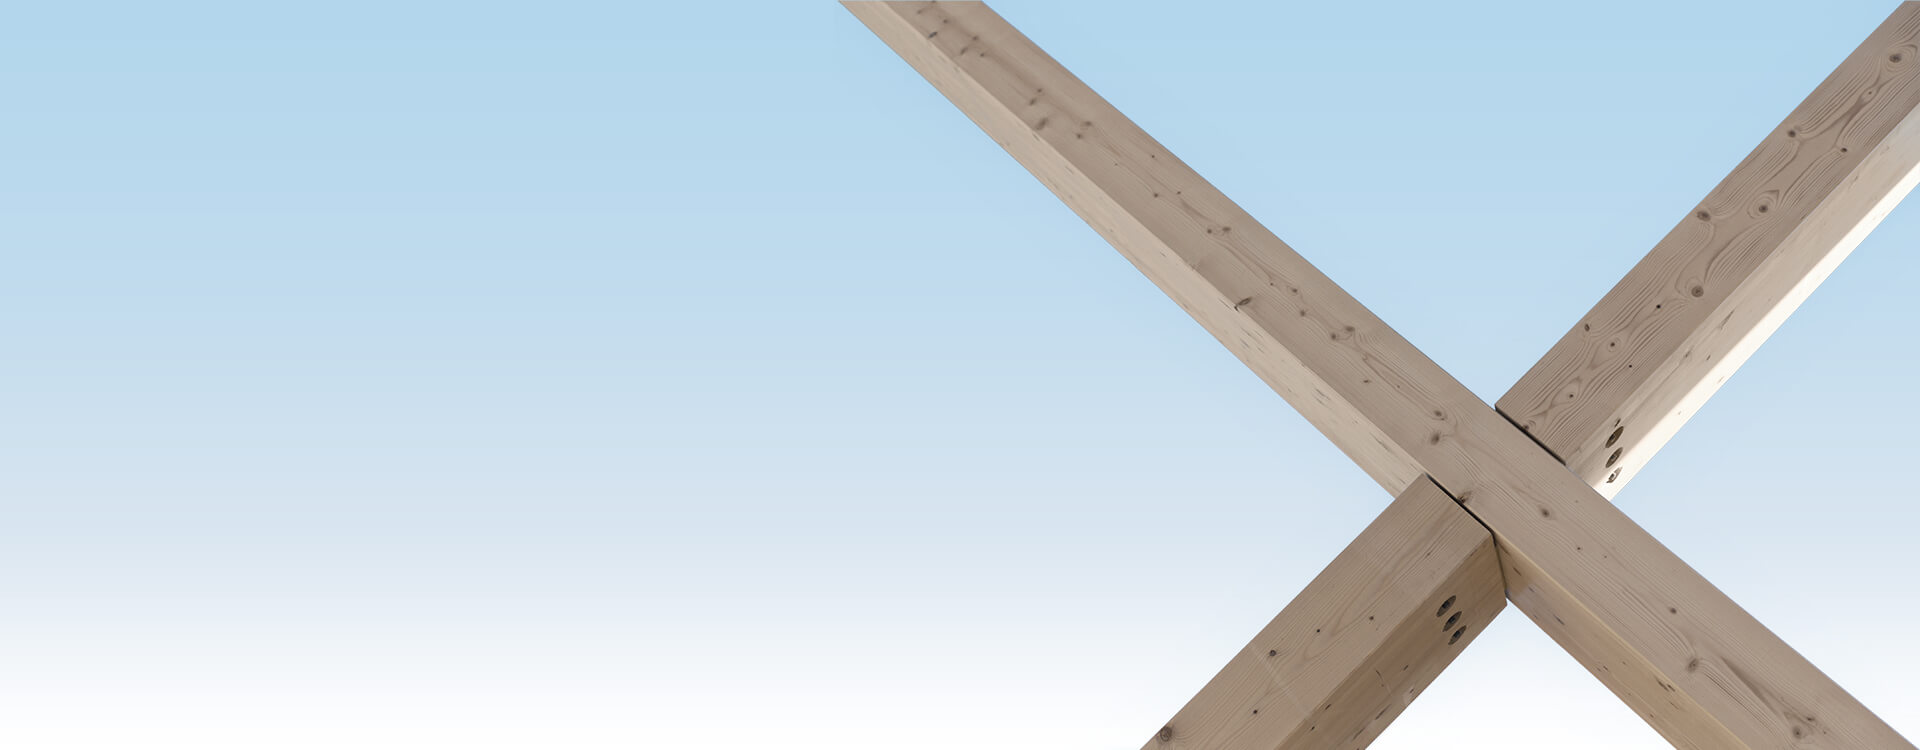 bnr-timberX-Concept Structural Design Tool